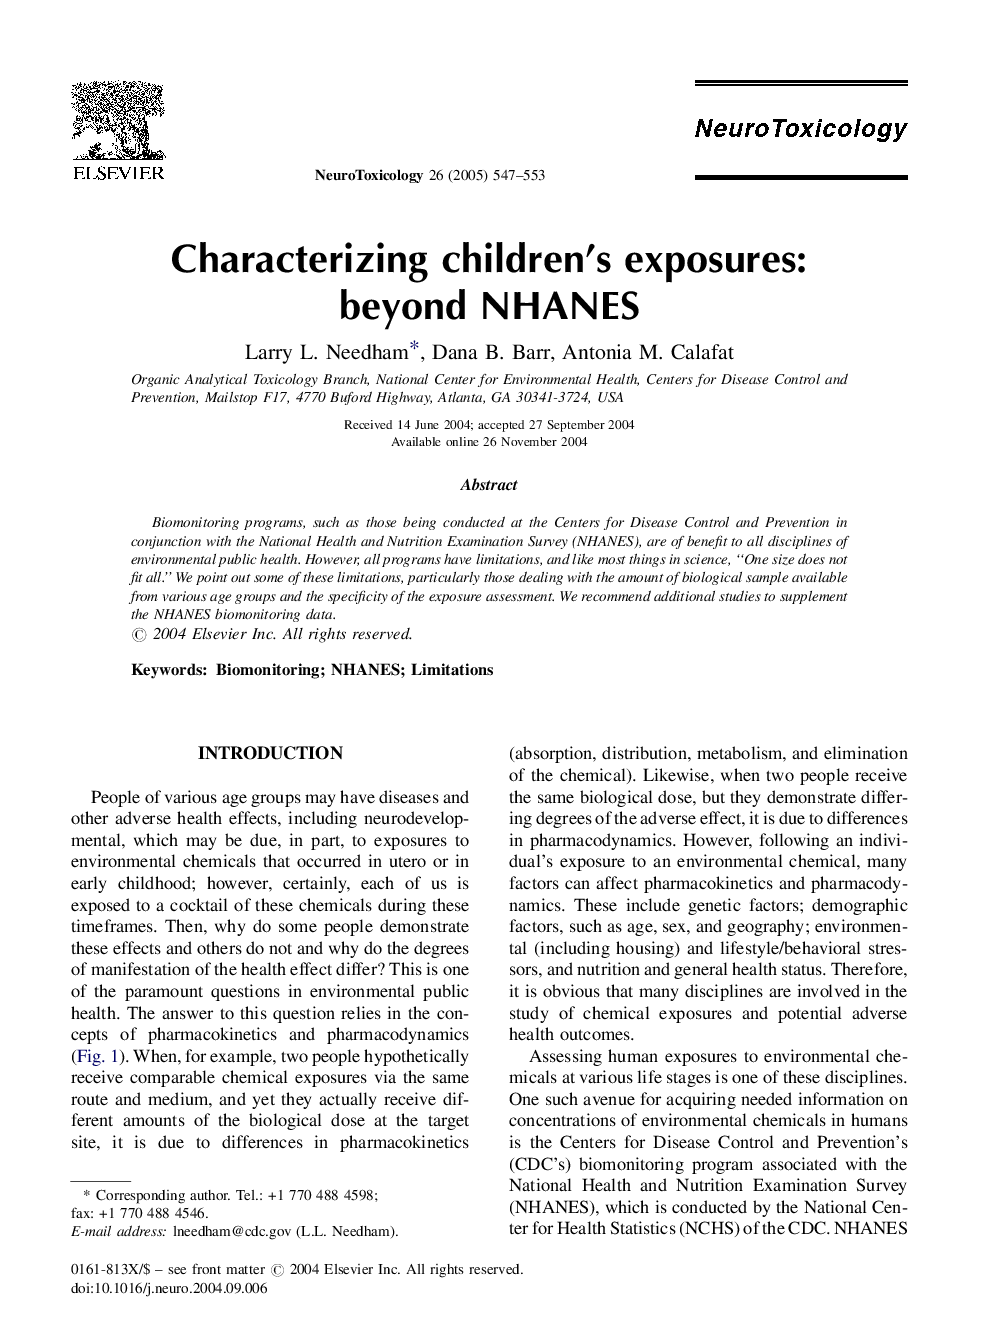 Characterizing children's exposures: beyond NHANES